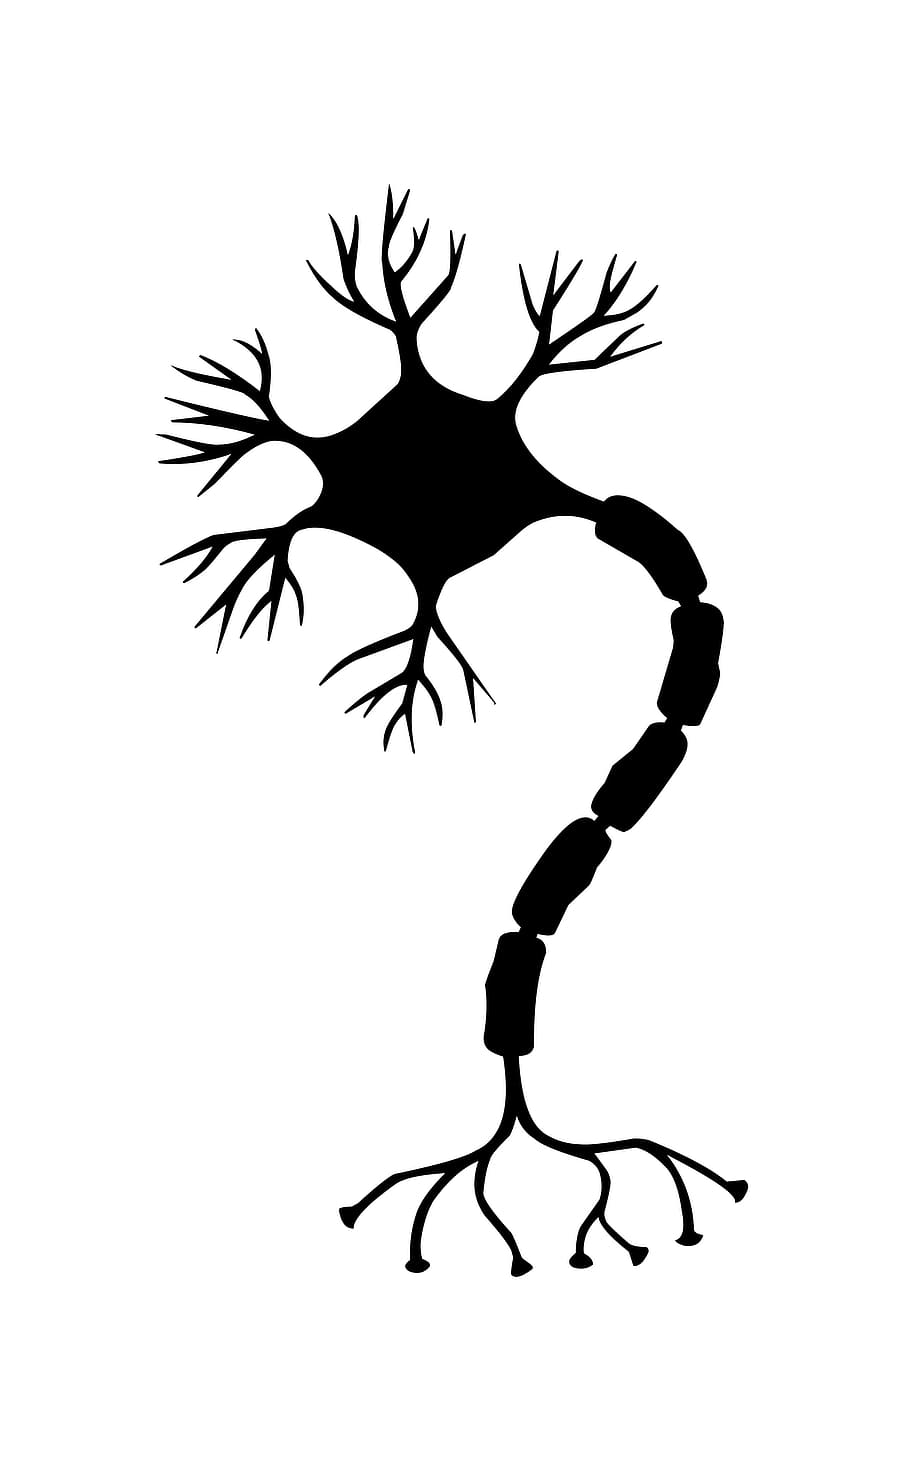 nervous system neurons